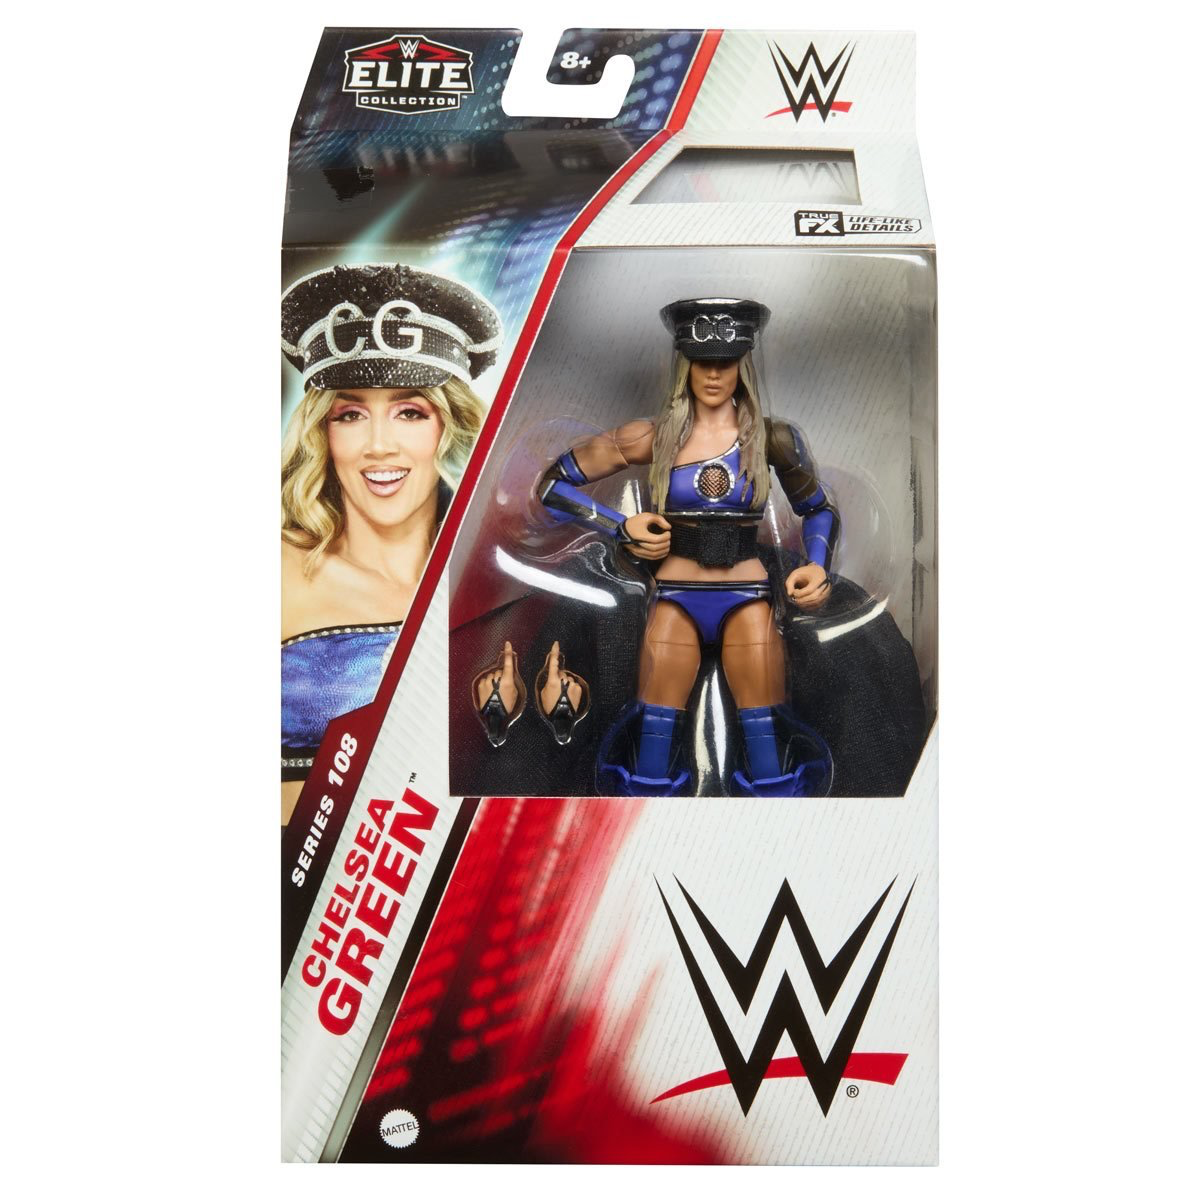 Chelsea Green - WWE Mattel Elite 108 Action Figure